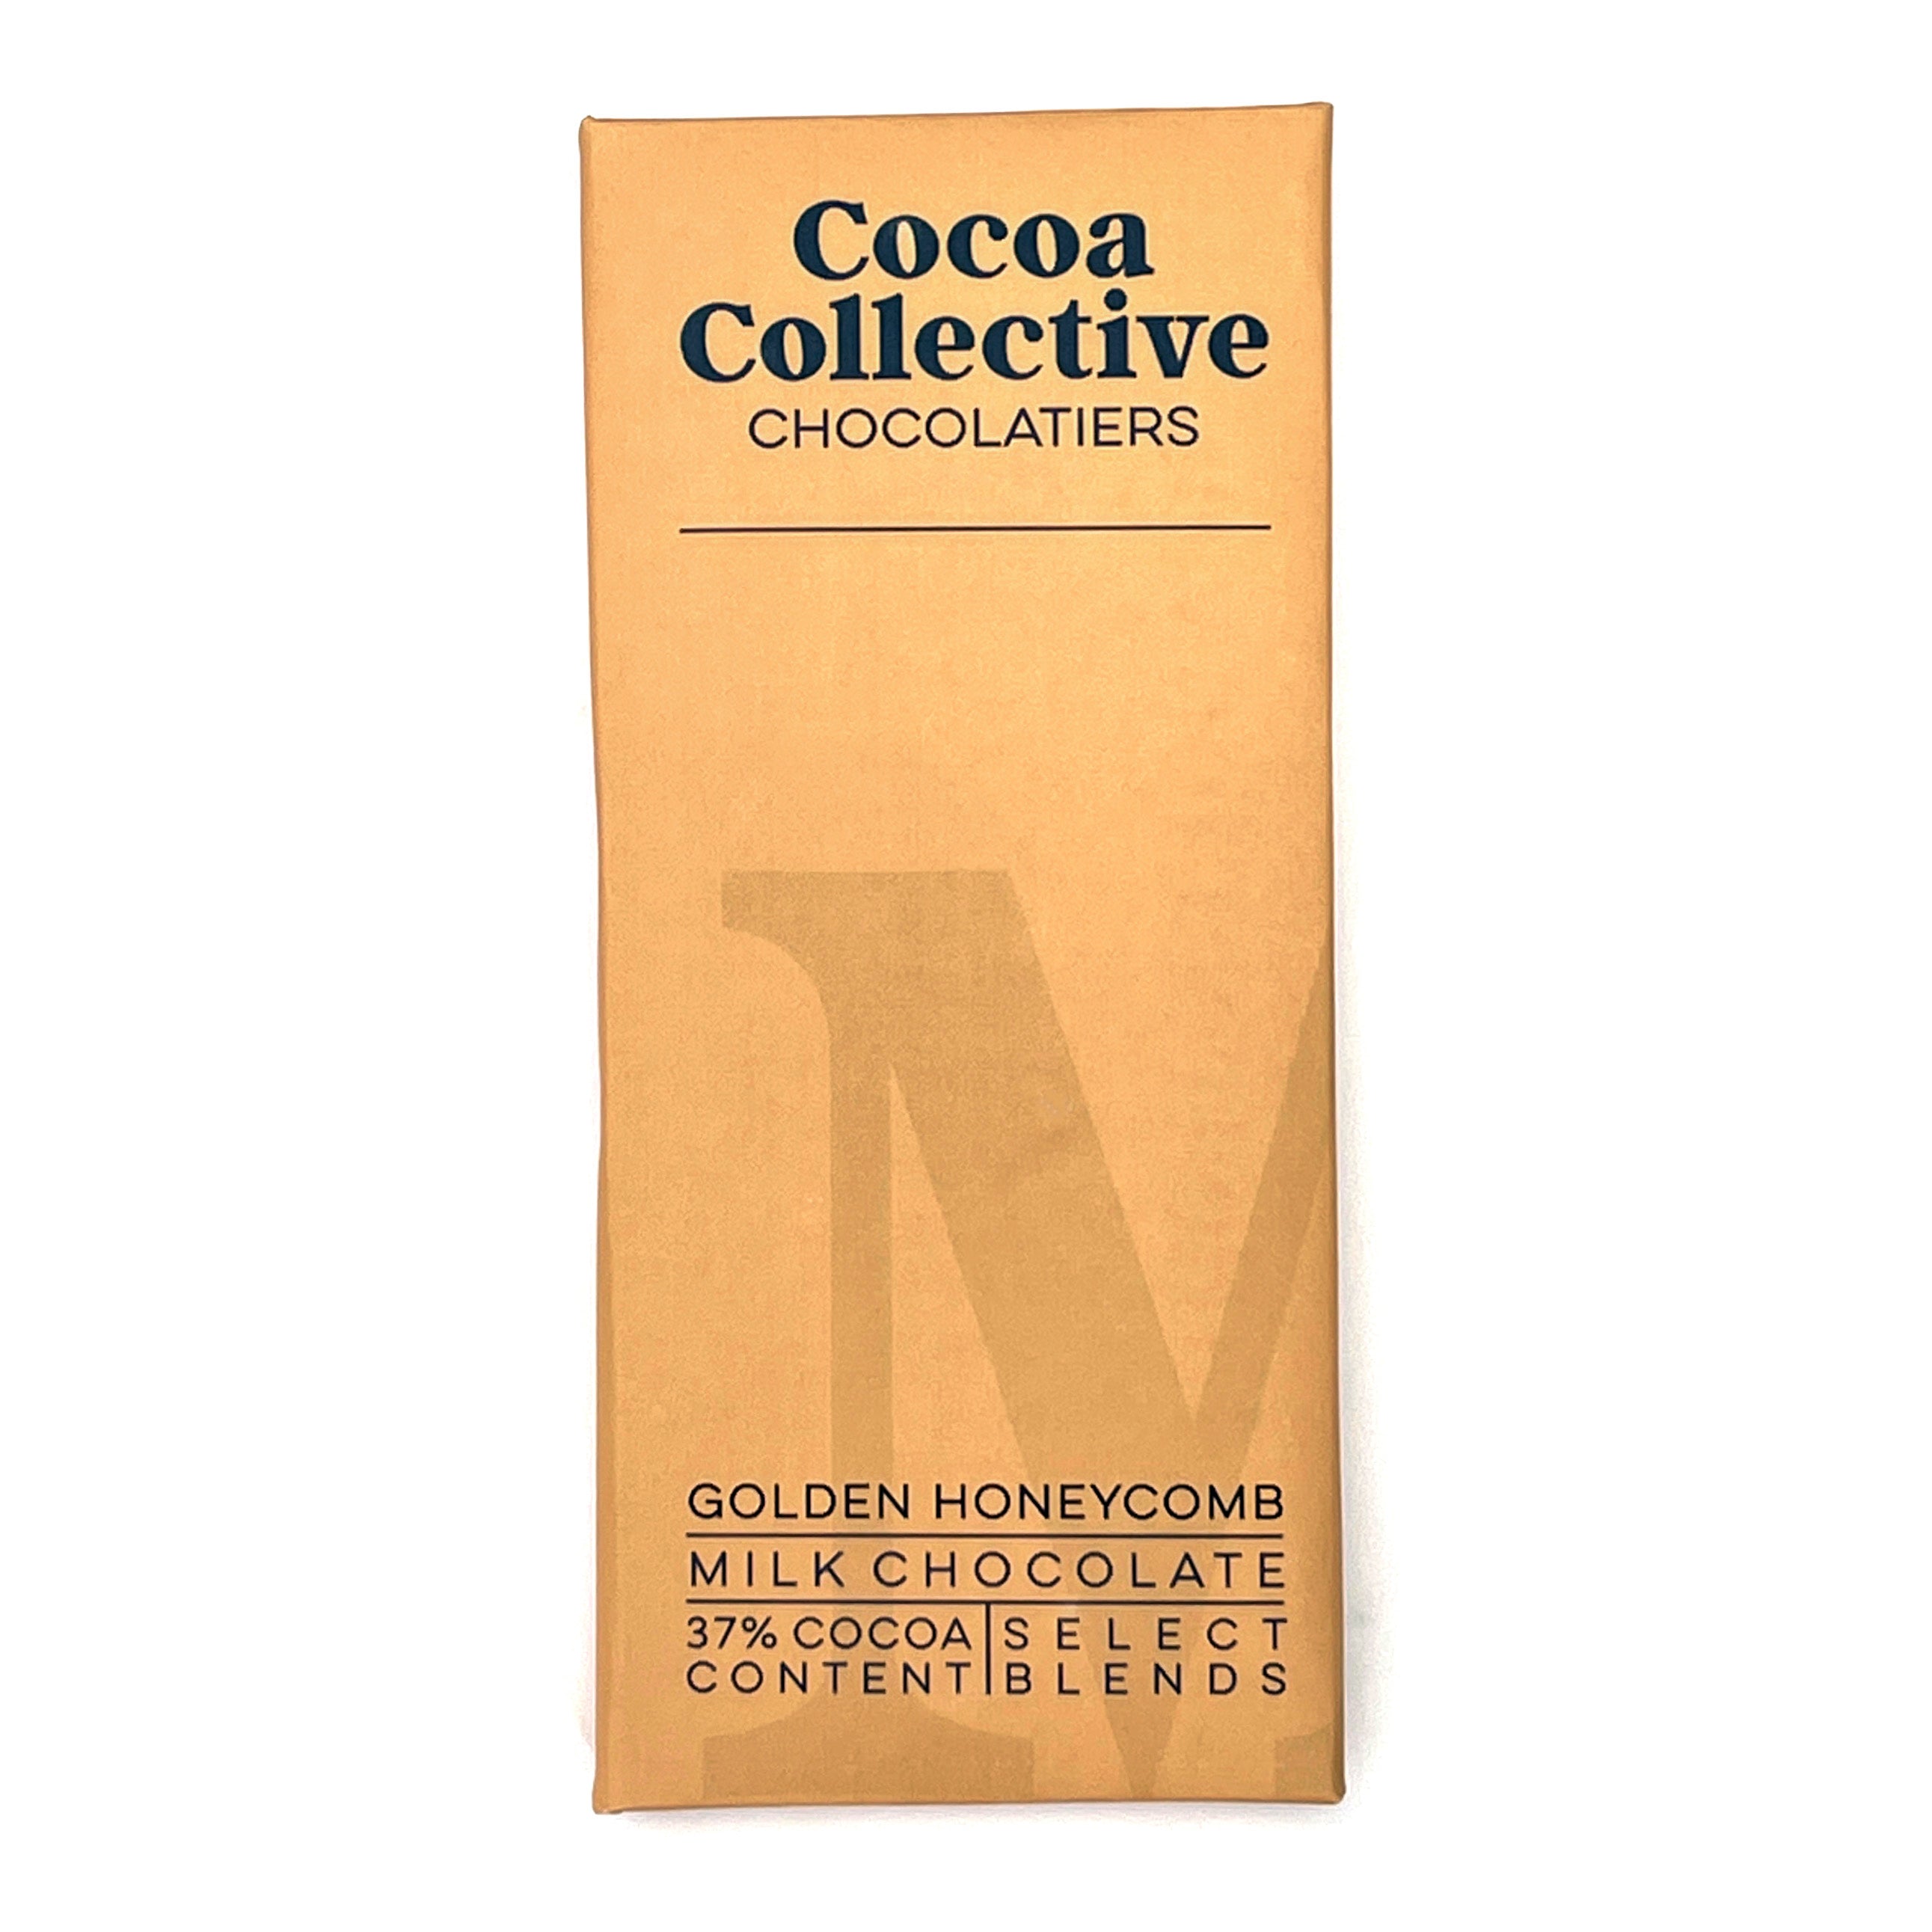 GOLDEN HONEYCOMB | 37% COCOA - Milk Chocolate Bars